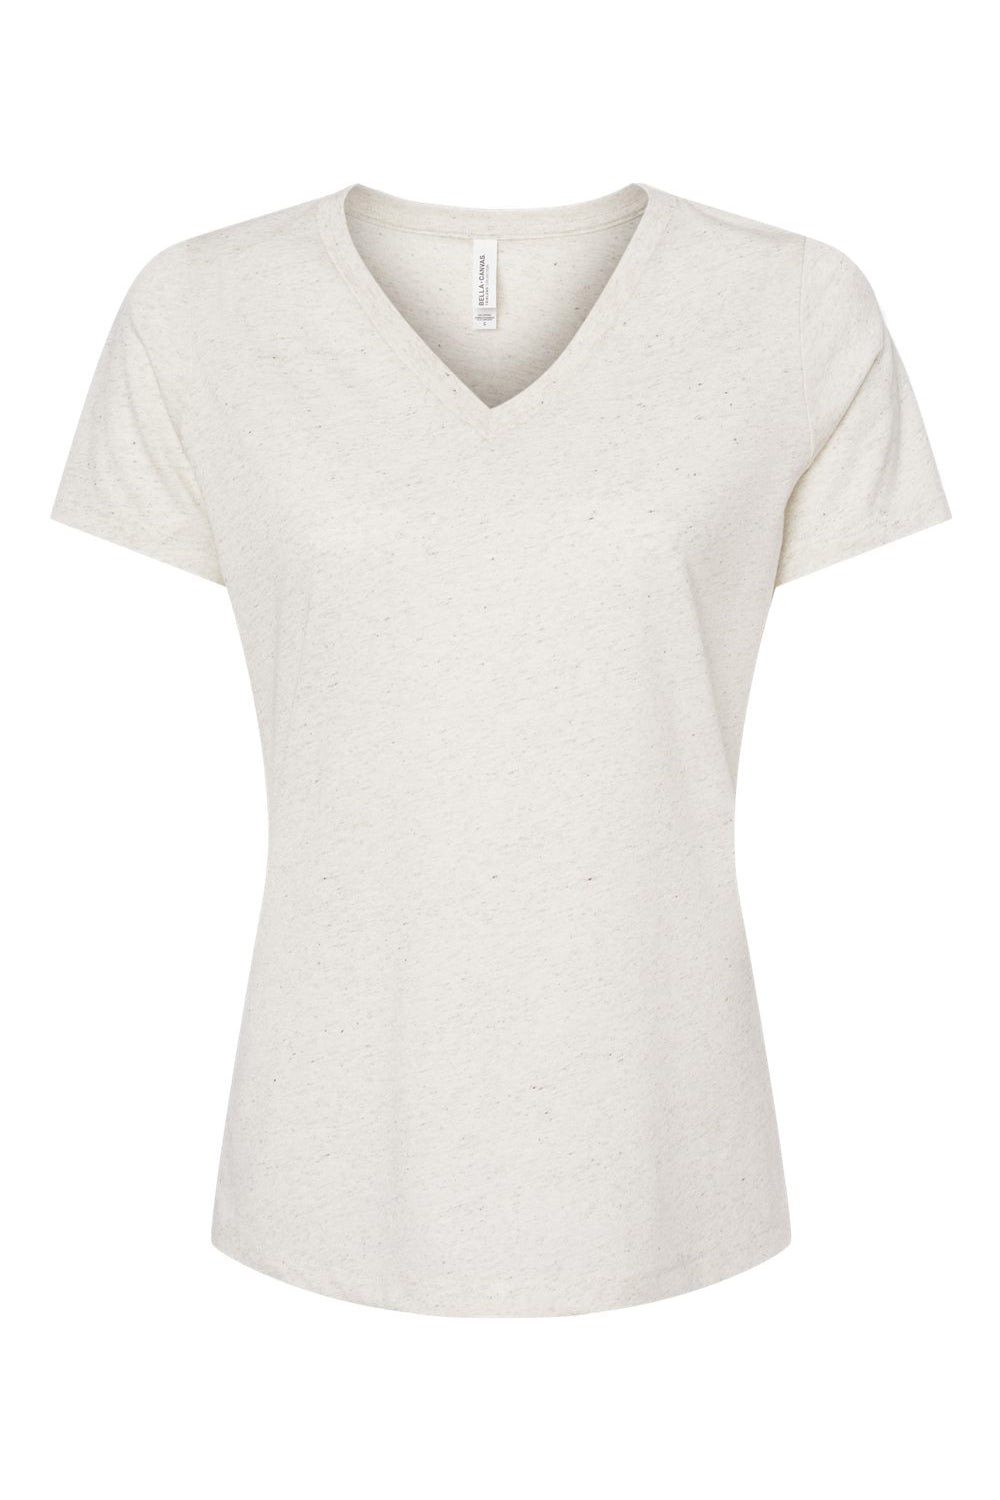 Bella + Canvas BC6415 Womens Short Sleeve V-Neck T-Shirt Oatmeal Flat Front